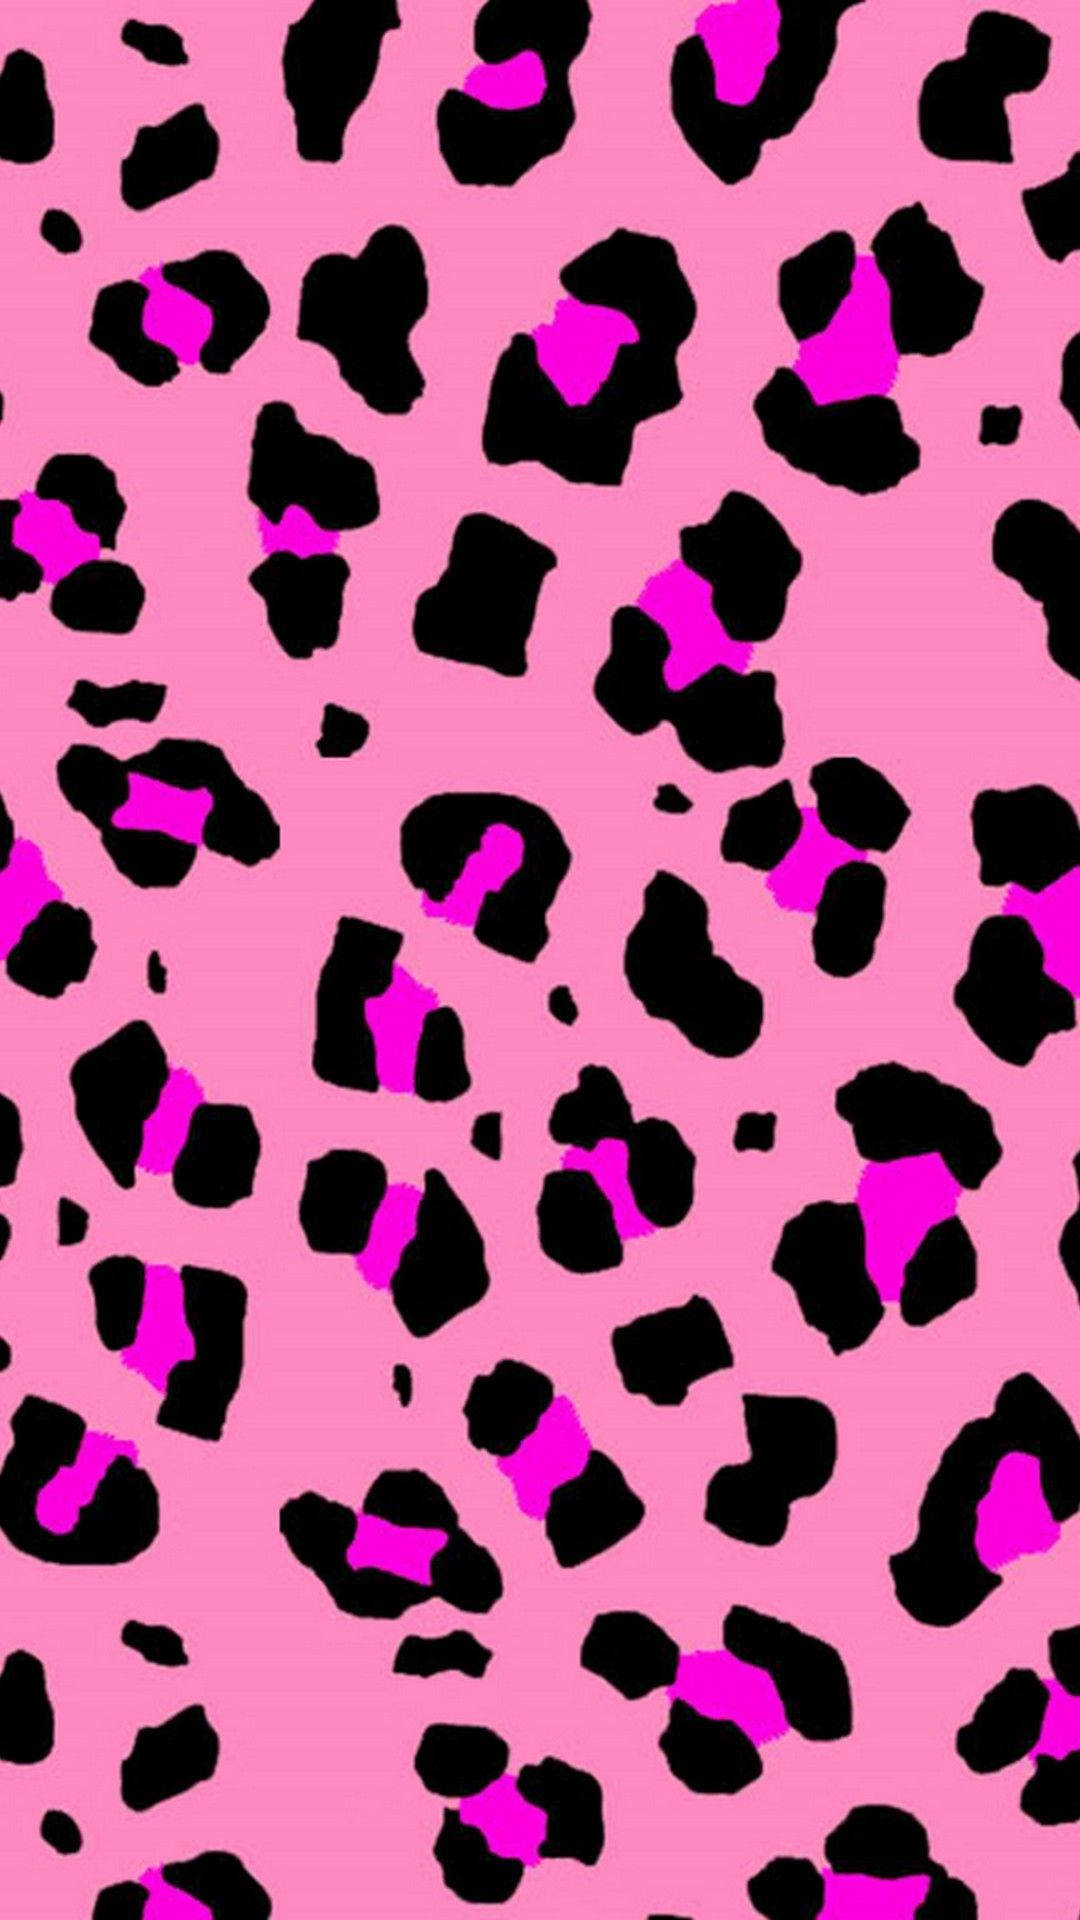 Neon Aesthetic Girly Leopard Print Wallpaper